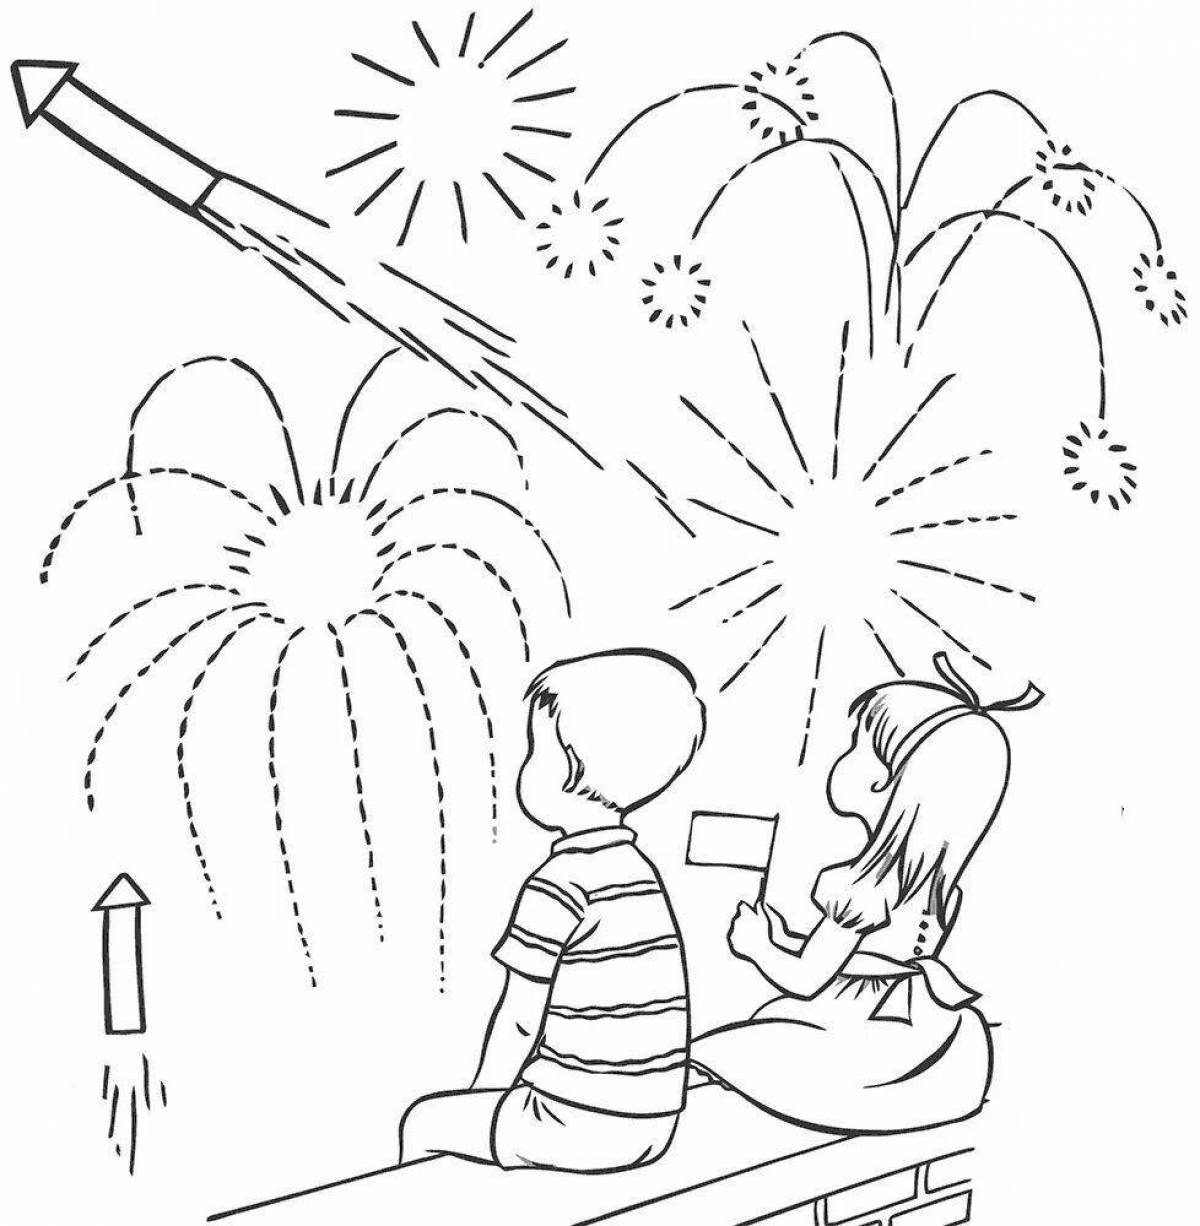 Wonderful fireworks coloring book for kids